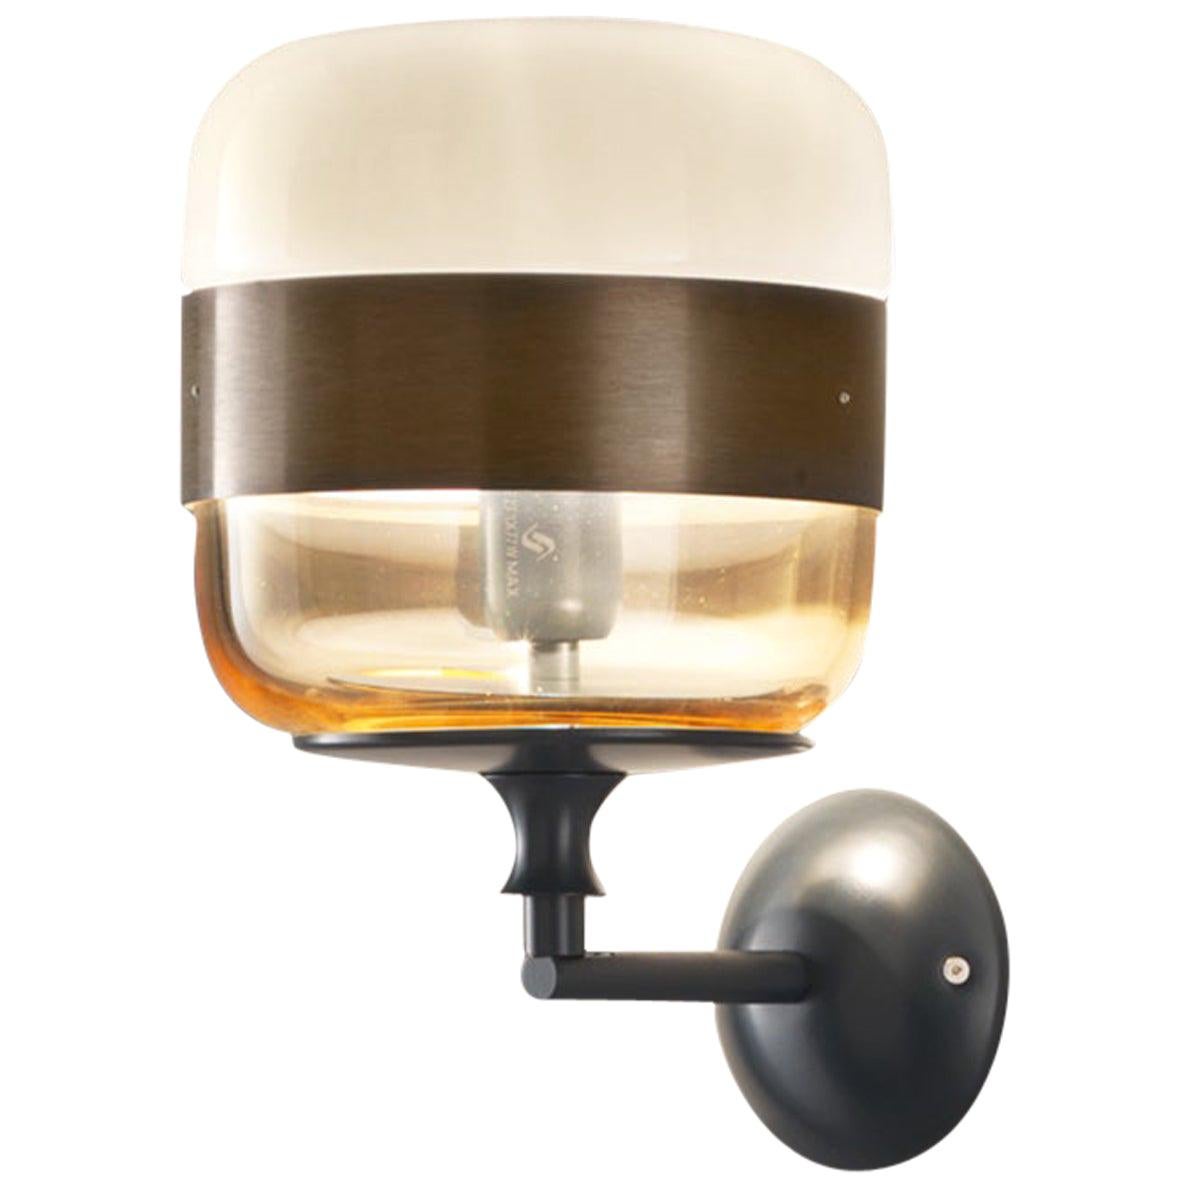 Vistosi Futura APP Wall Lamp in Amber by Hangar Design Group For Sale